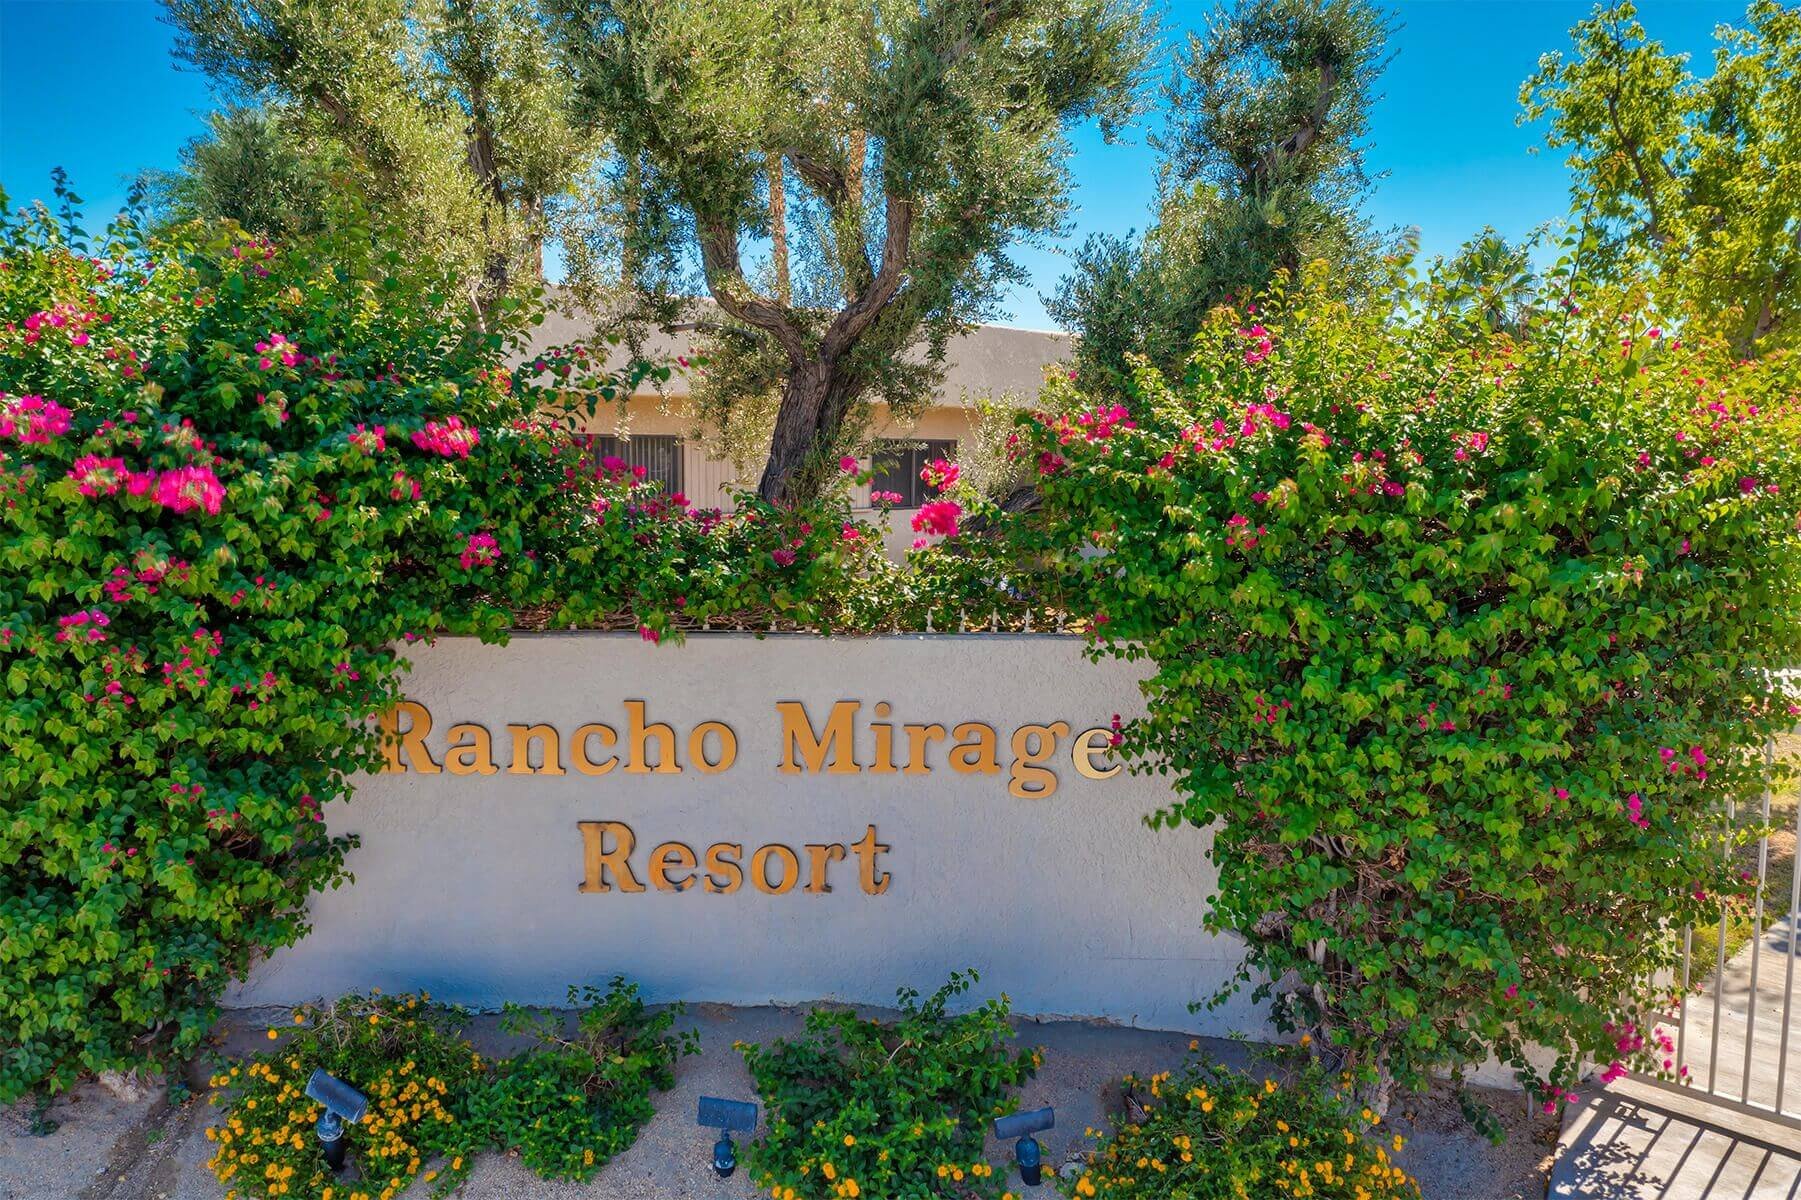 Rancho Mirage Resort Photo Gallery